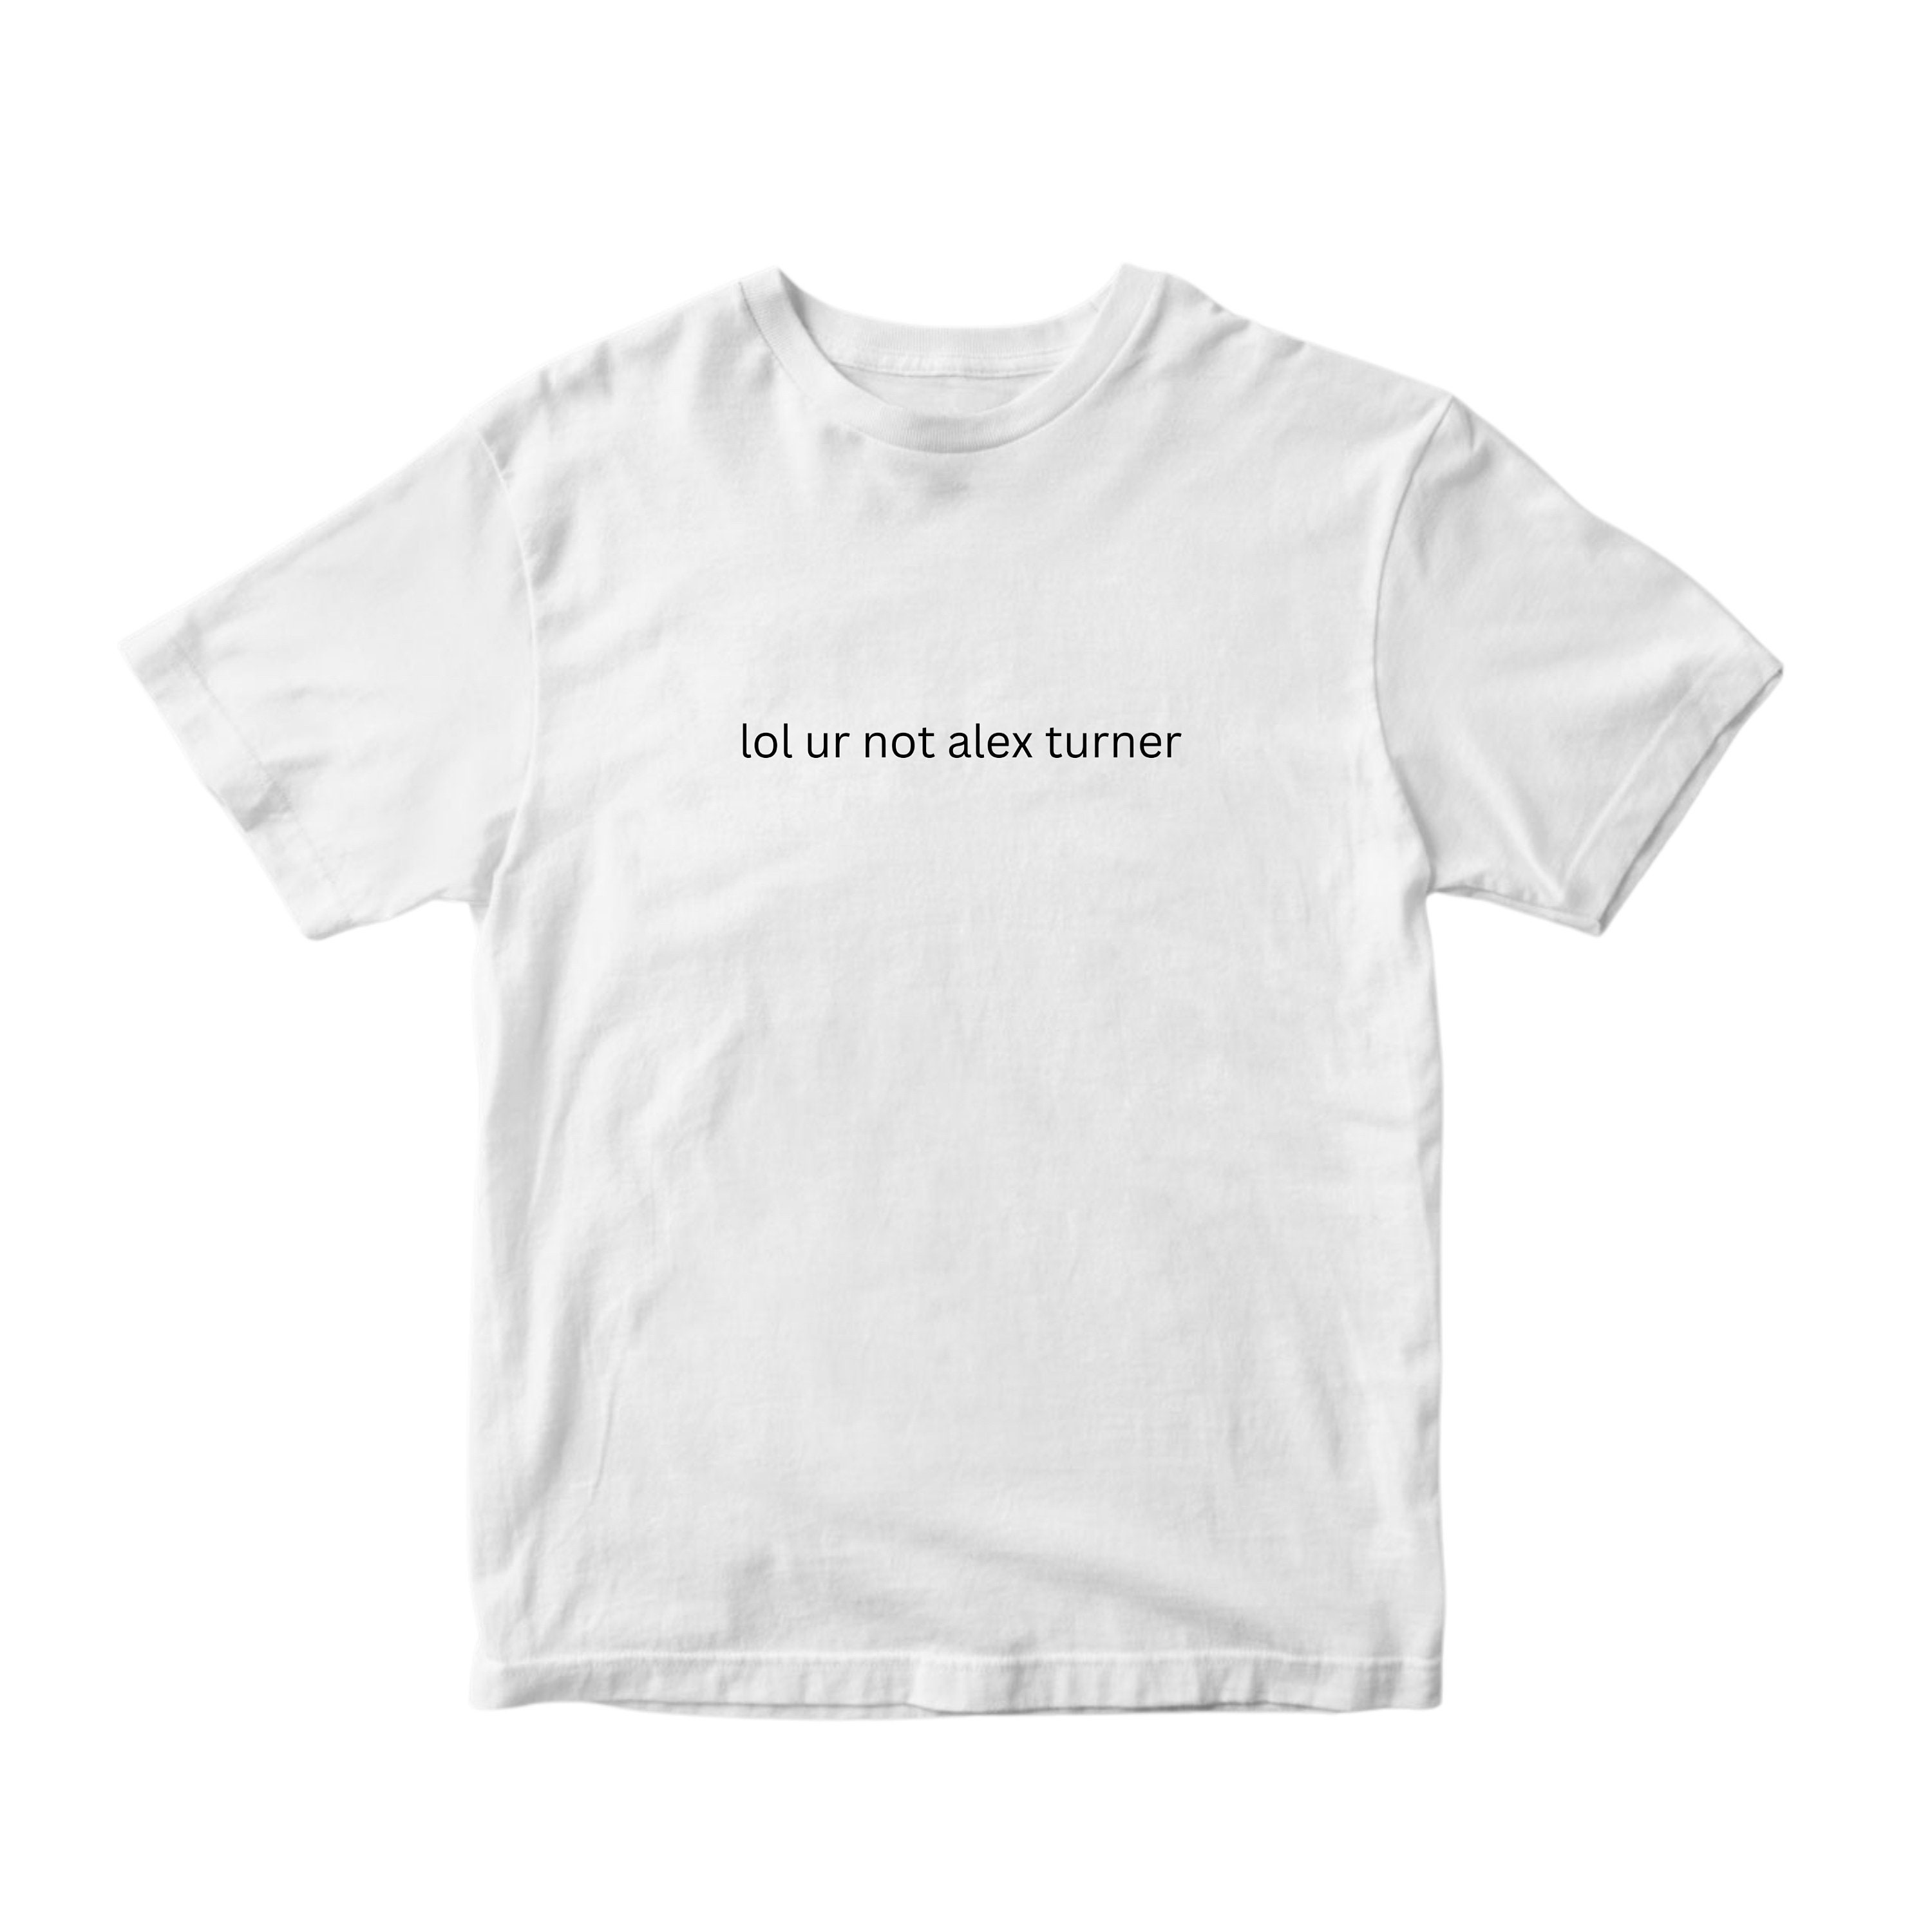 No More Lol's I Mean It! T-Shirt